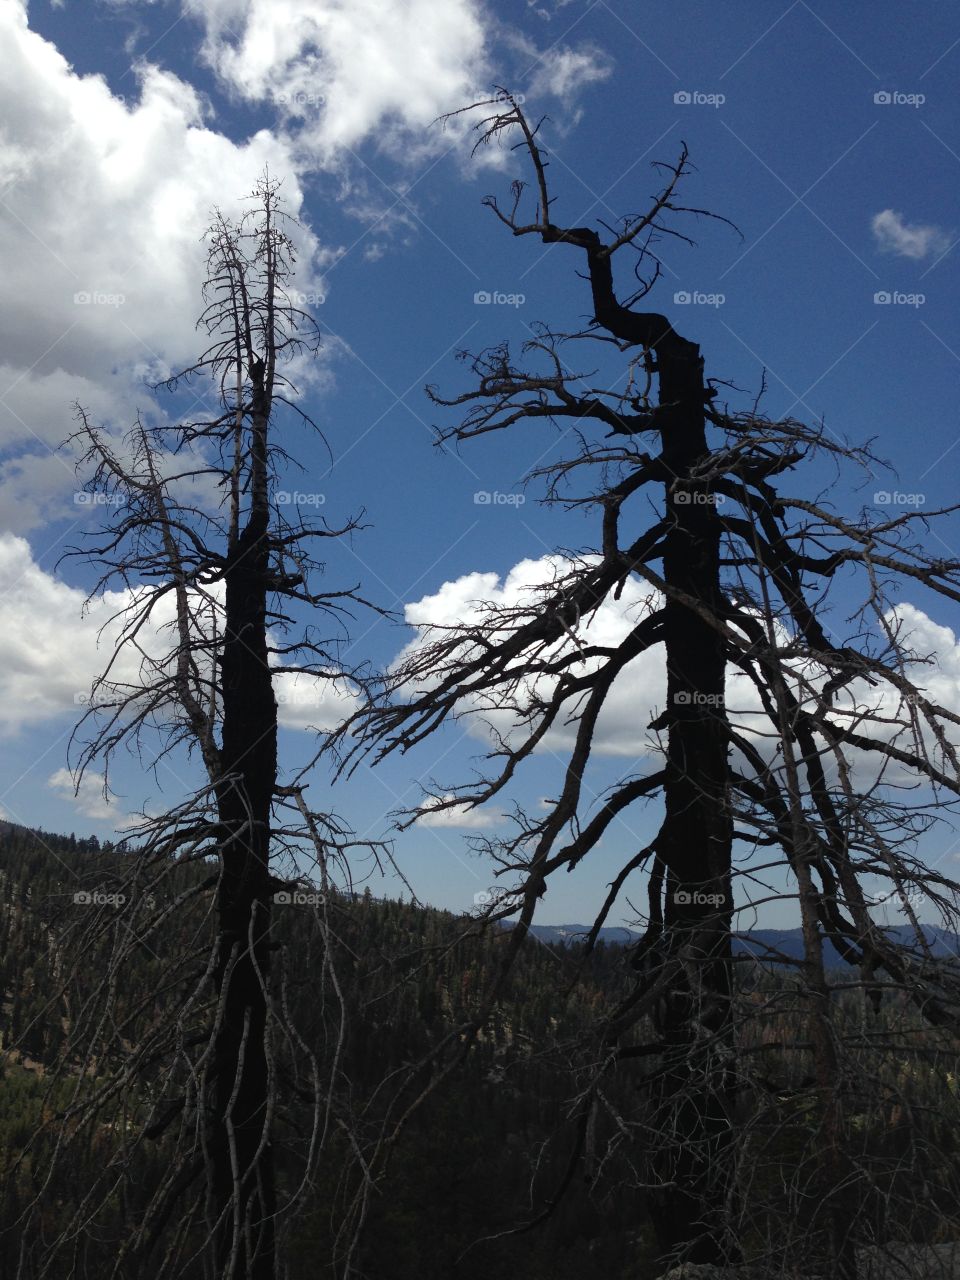 2 burnt trees. 2 trees struck by lightning, Sequoia National Park 